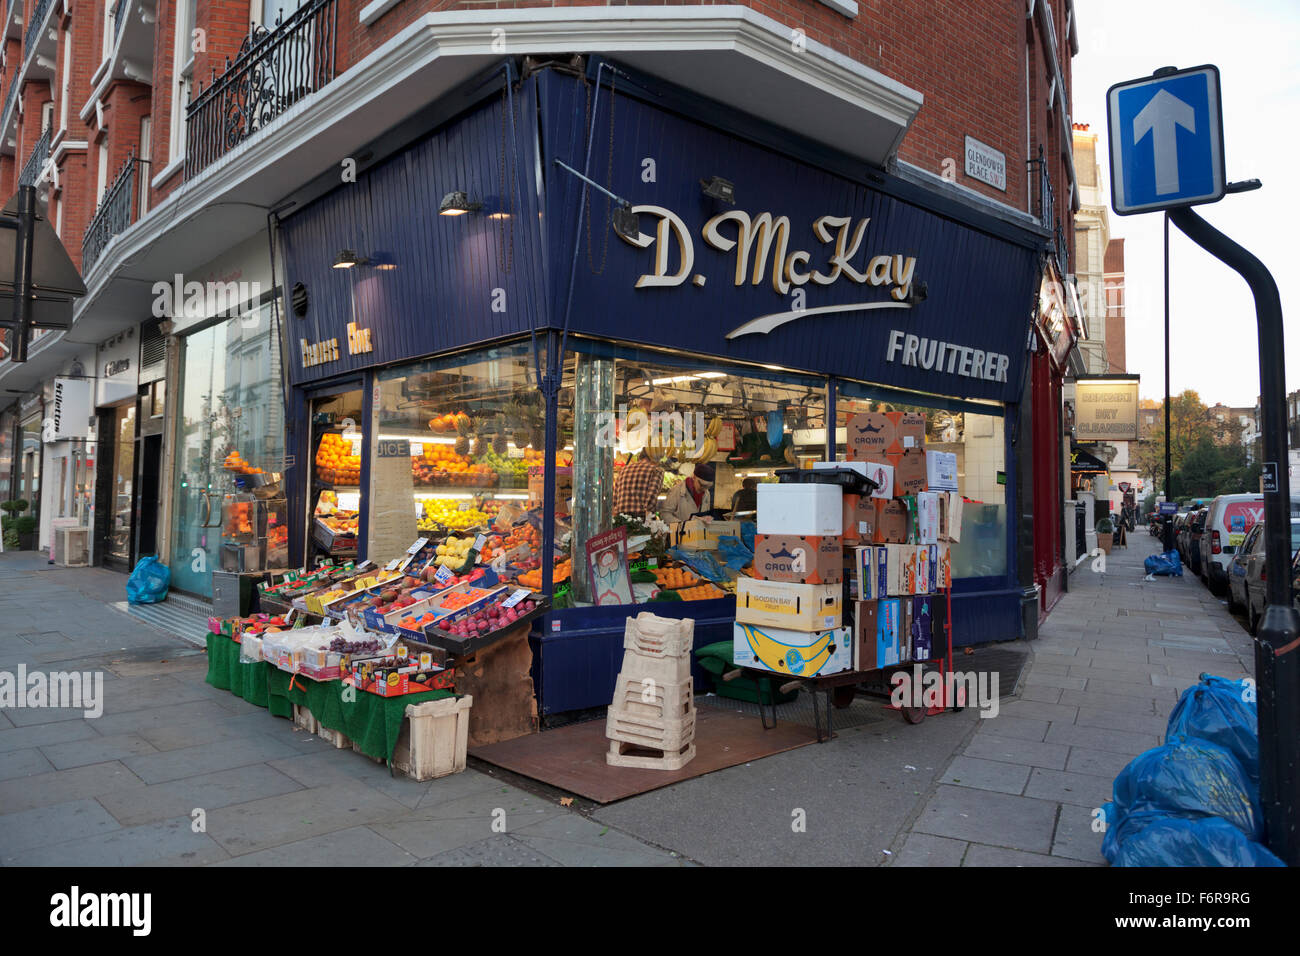 D McKay Fruiterer corner shop vendeur de fruits Banque D'Images